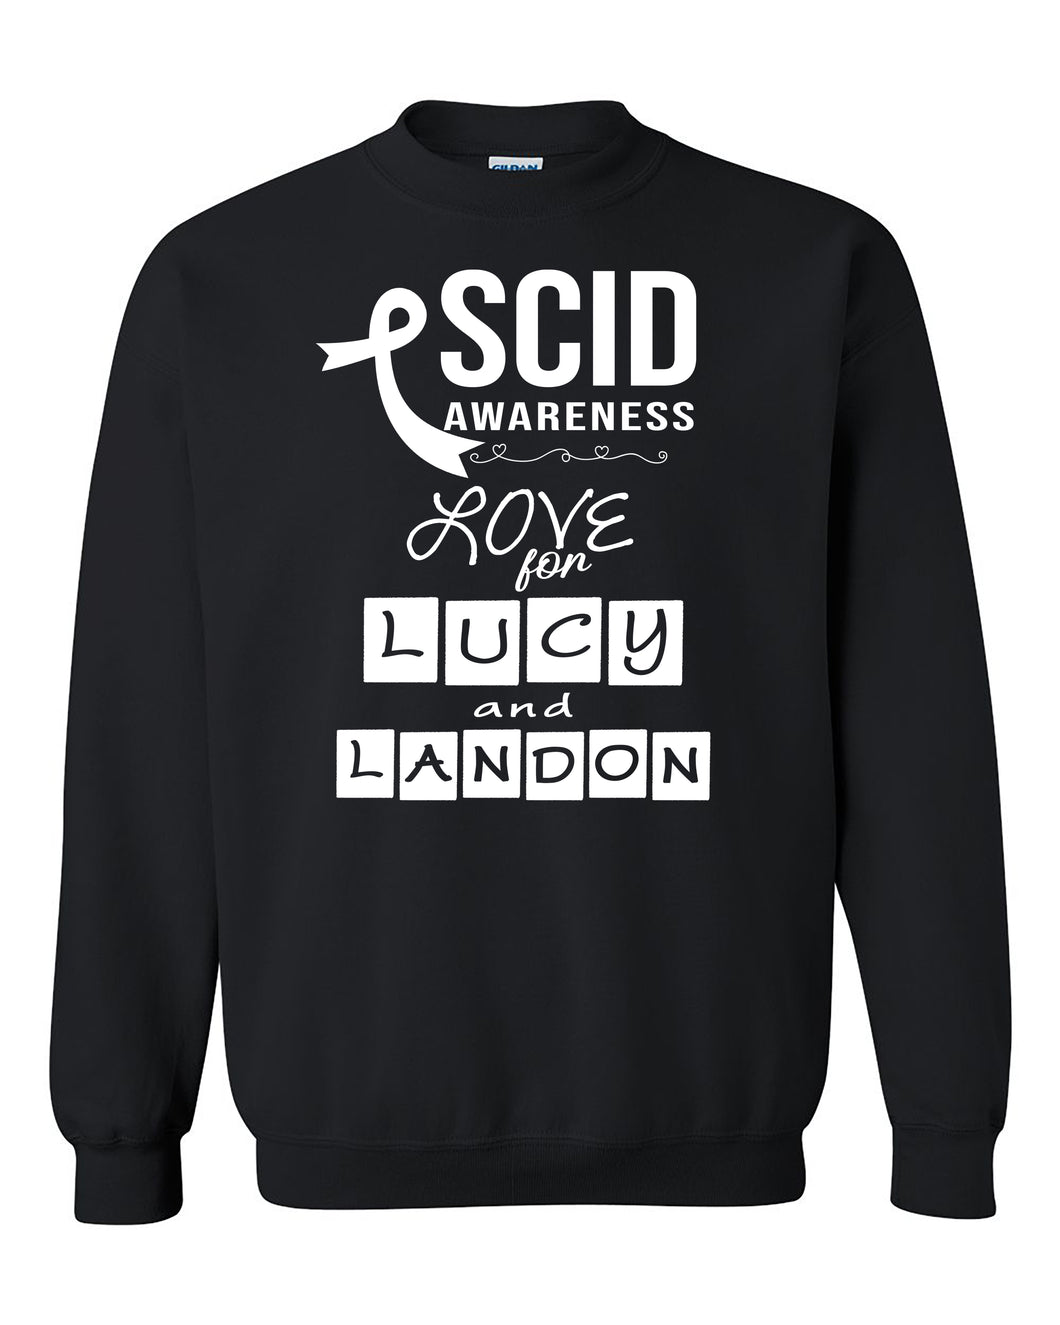 Love for Lucy & Landon Crewneck Sweatshirt